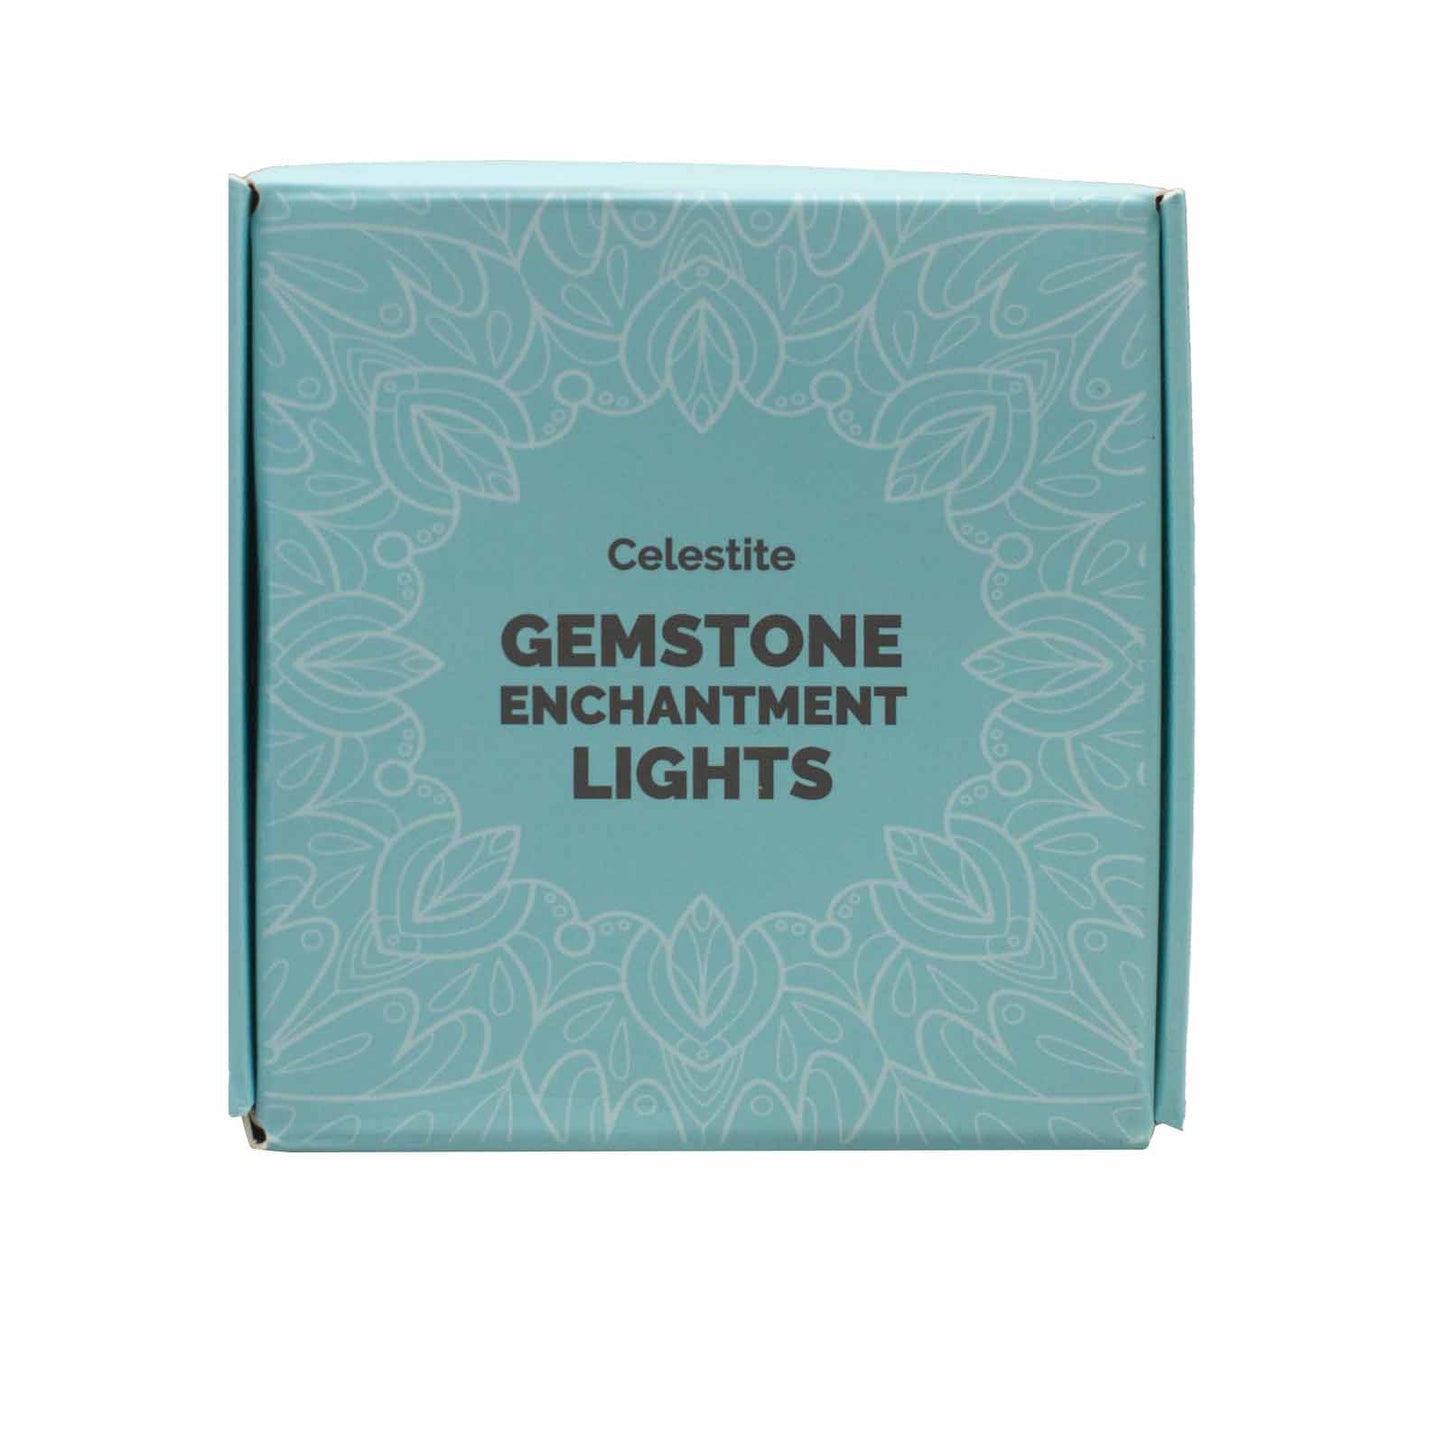 Gemstone Enchantment Lights - Celestite